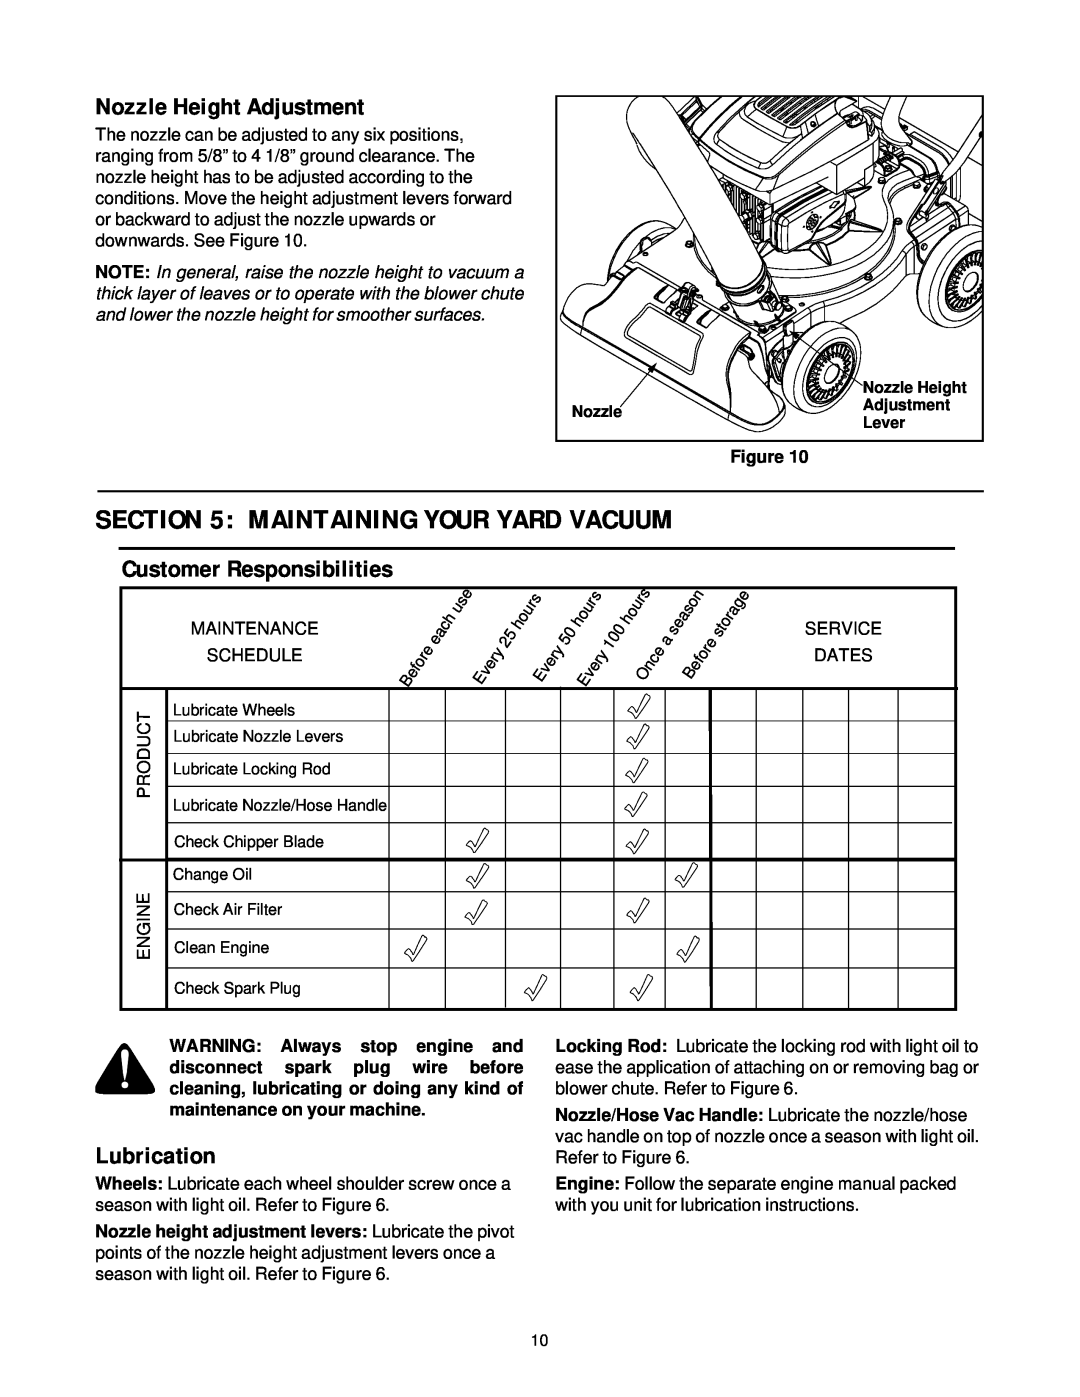 Yard-Man 247.77038 manual Nozzle Height Adjustment, Customer Responsibilities, Lubrication, Maintaining Your Yard Vacuum 